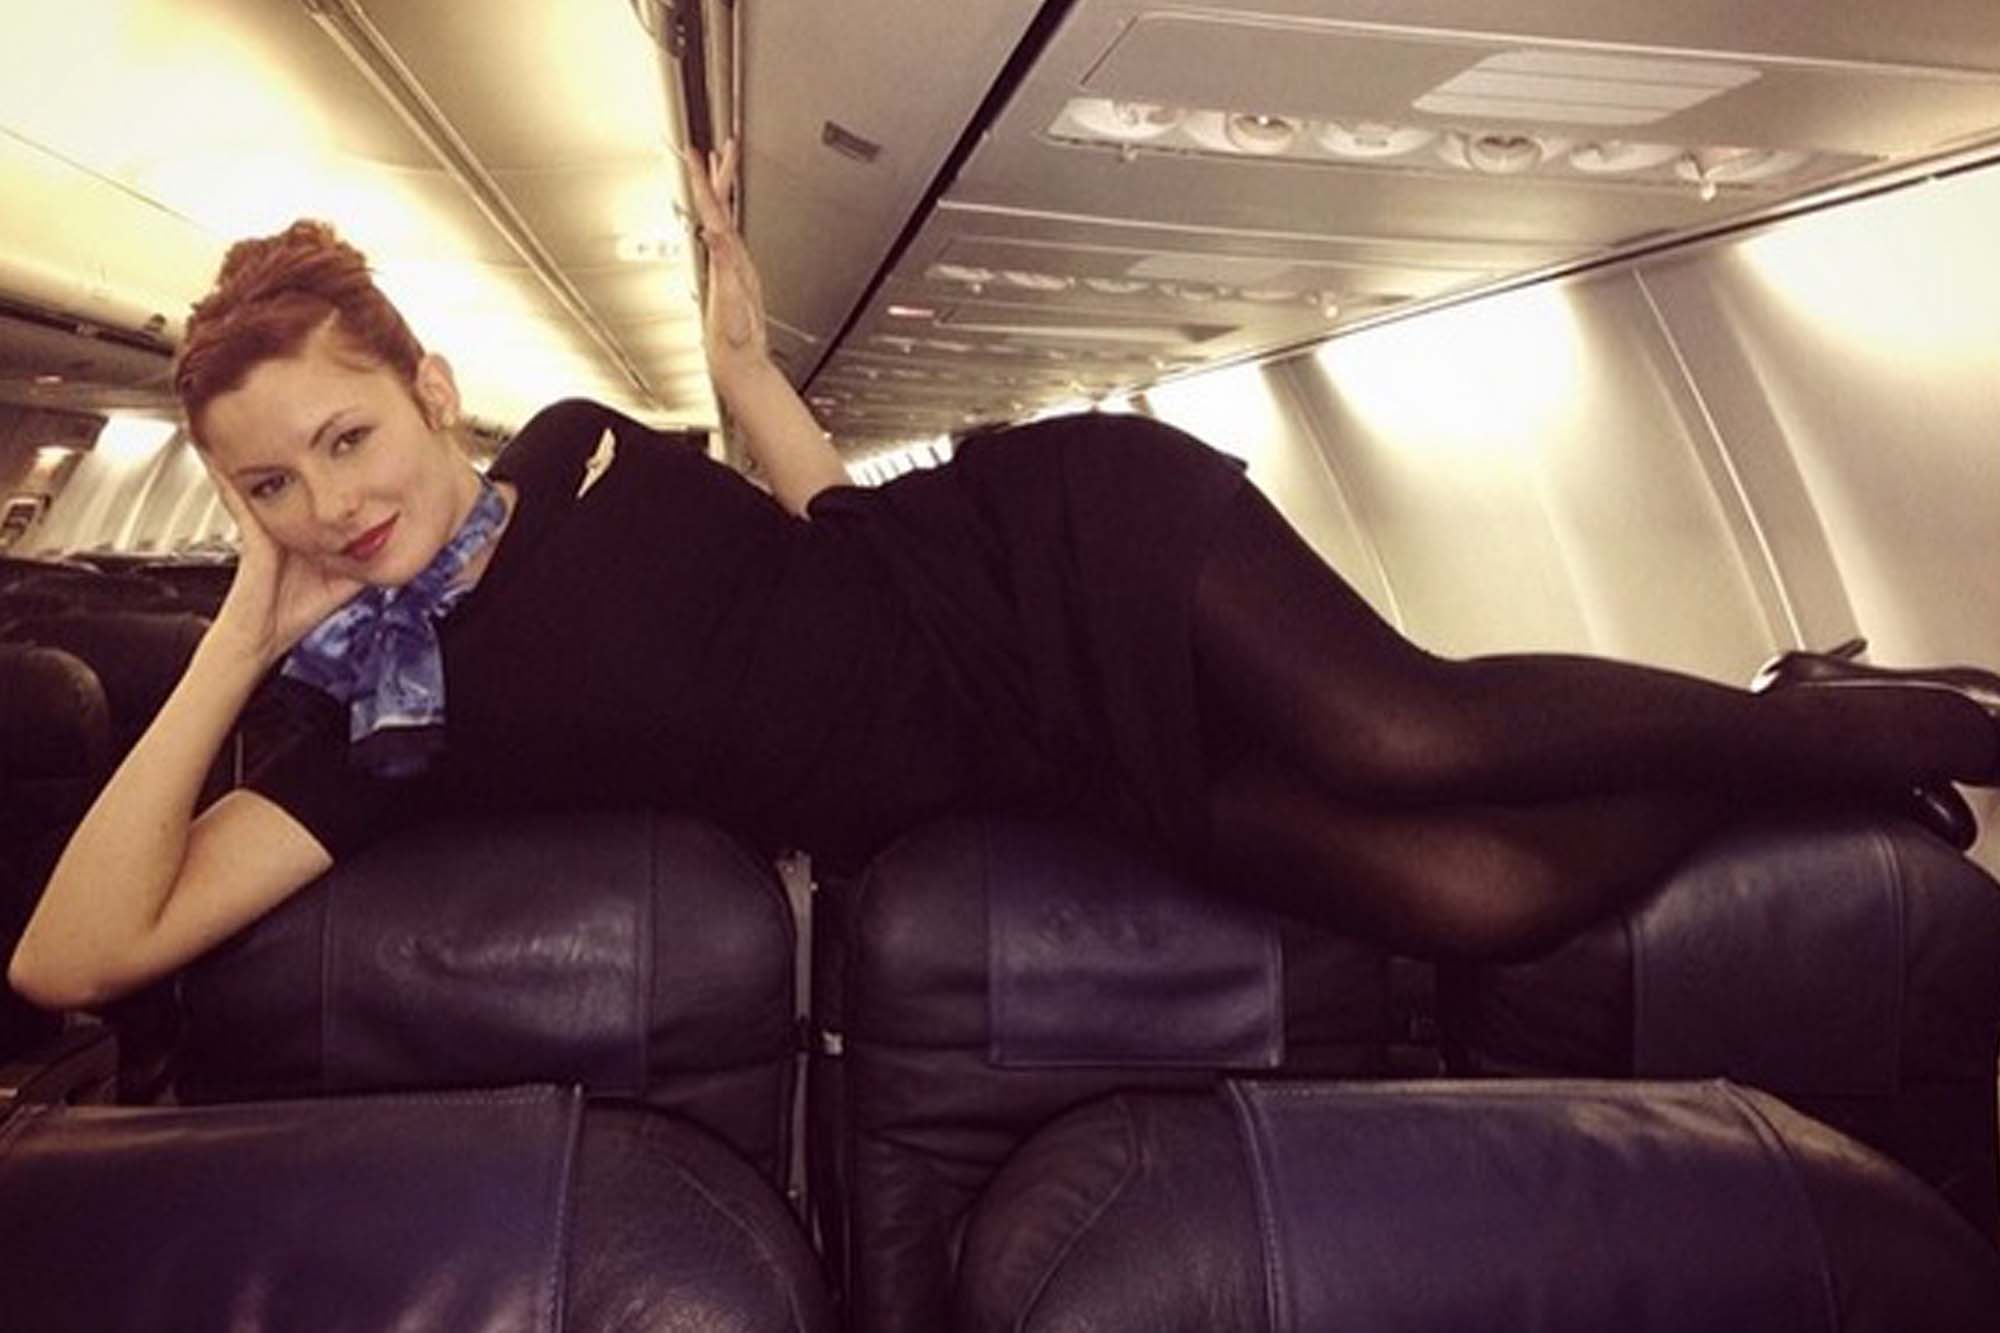 benjamin perks recommends Flight Attendant Nude Selfies